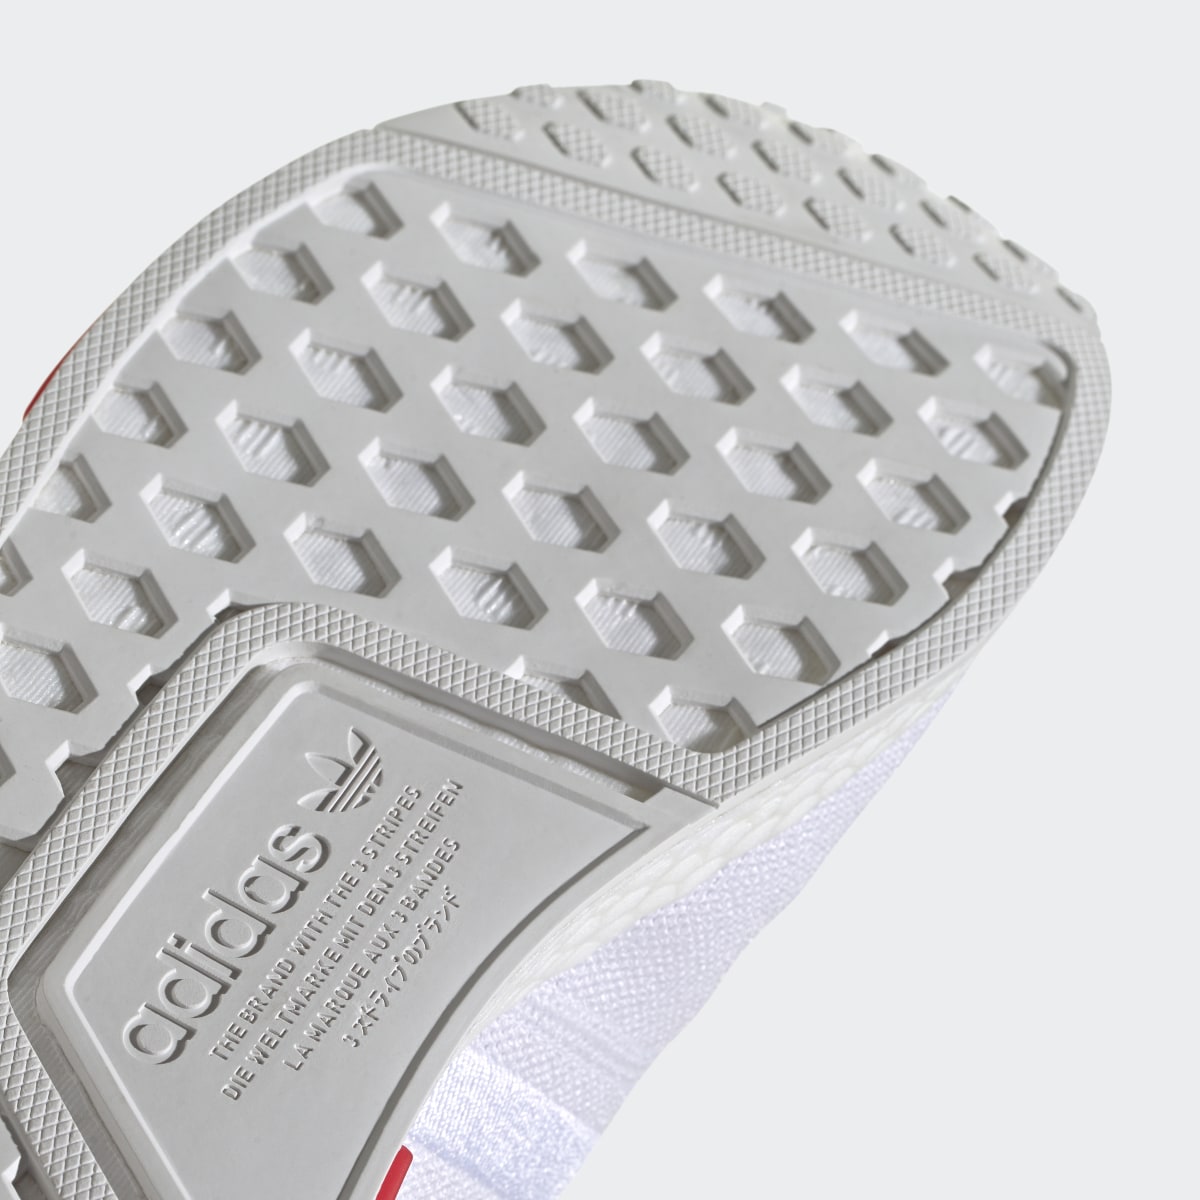 Adidas Zapatilla NMD_R1. 4